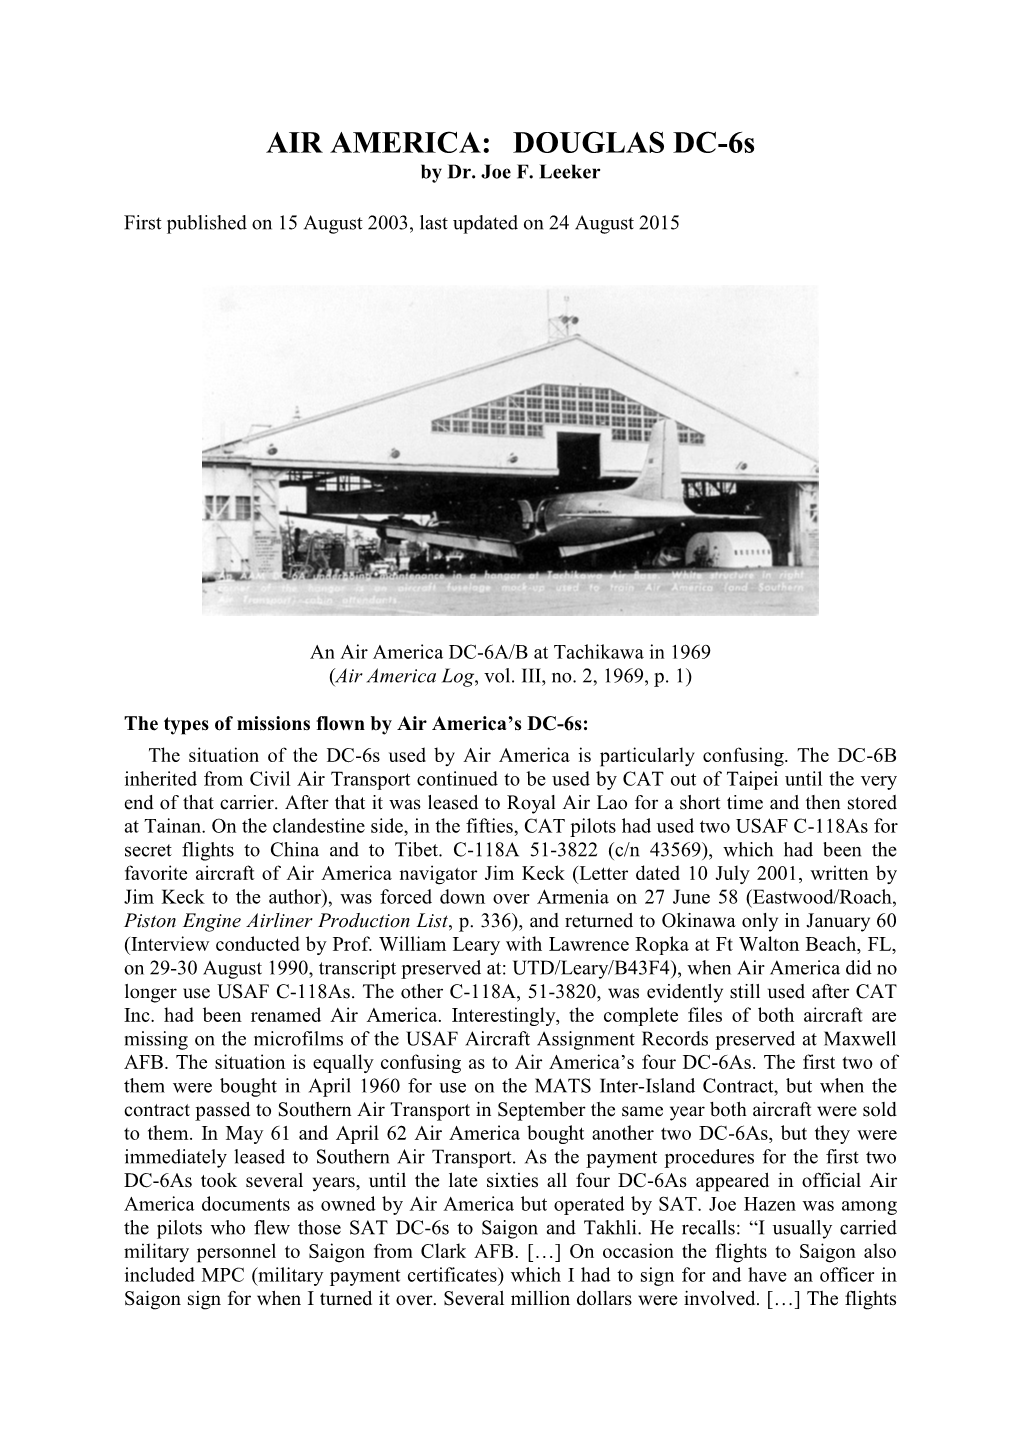 AIR AMERICA: DOUGLAS DC-6S by Dr